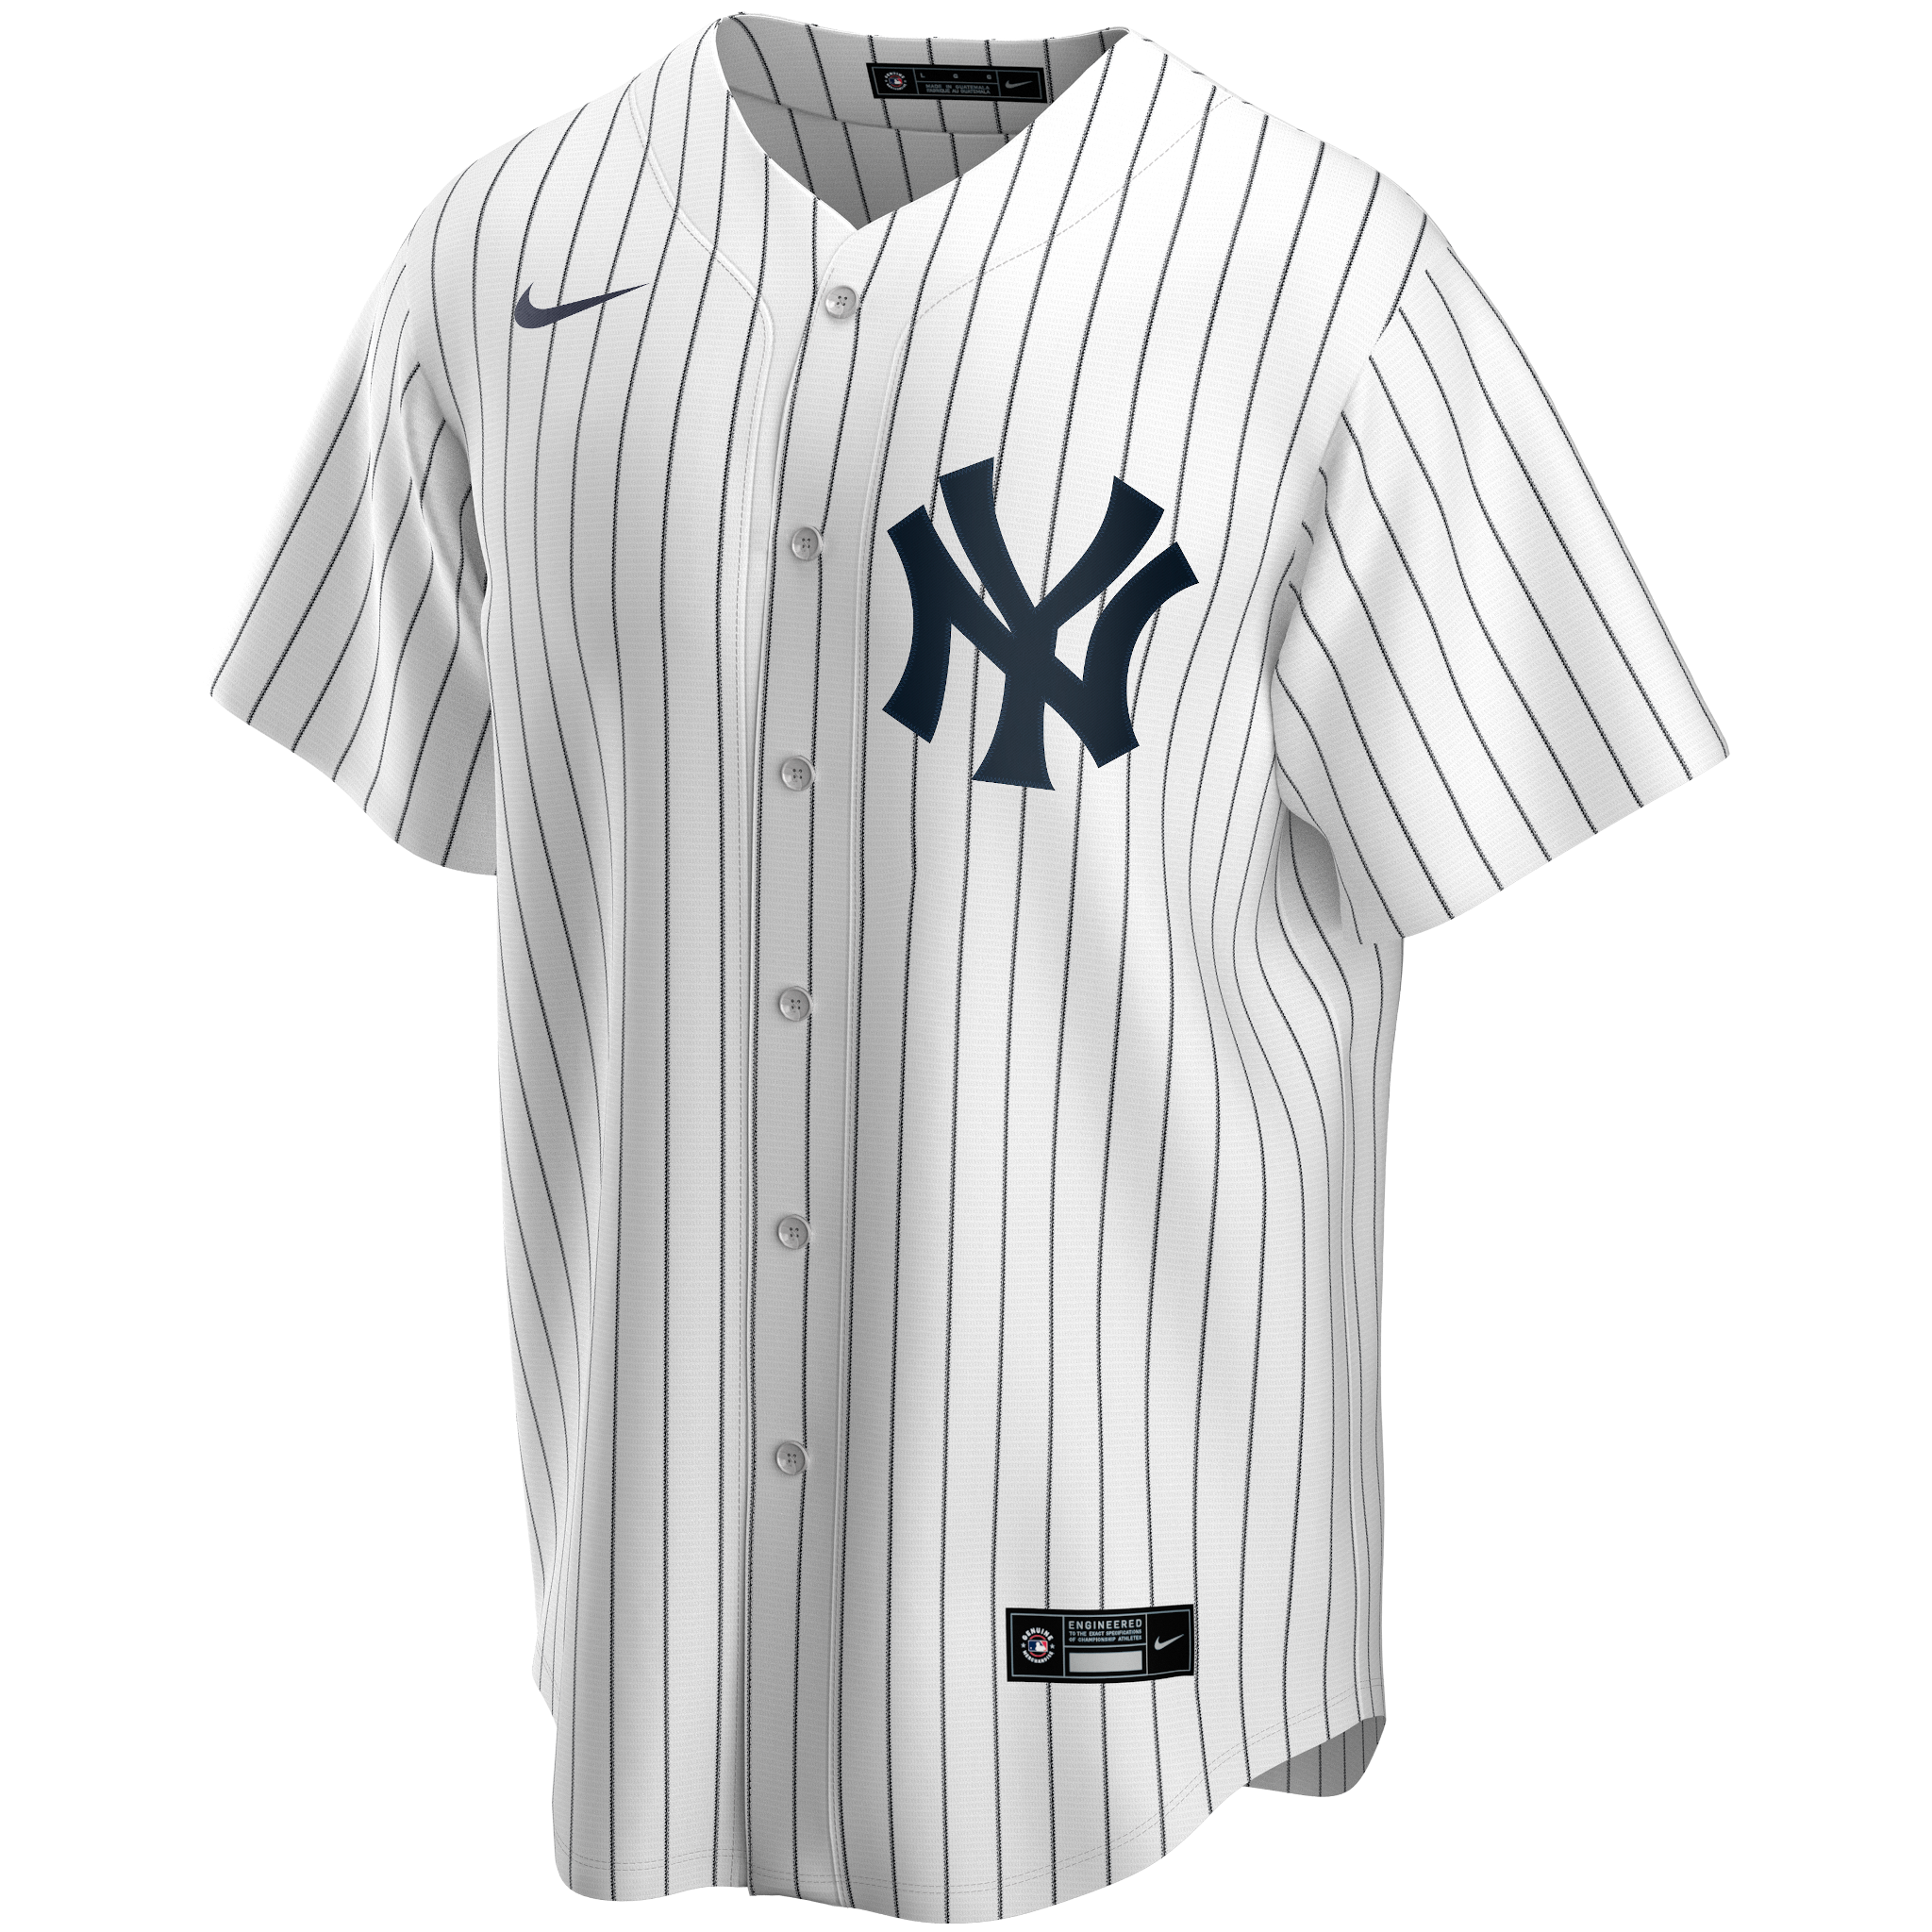 Evolution In Design New York Yankees #2 Jersey Size 5xl